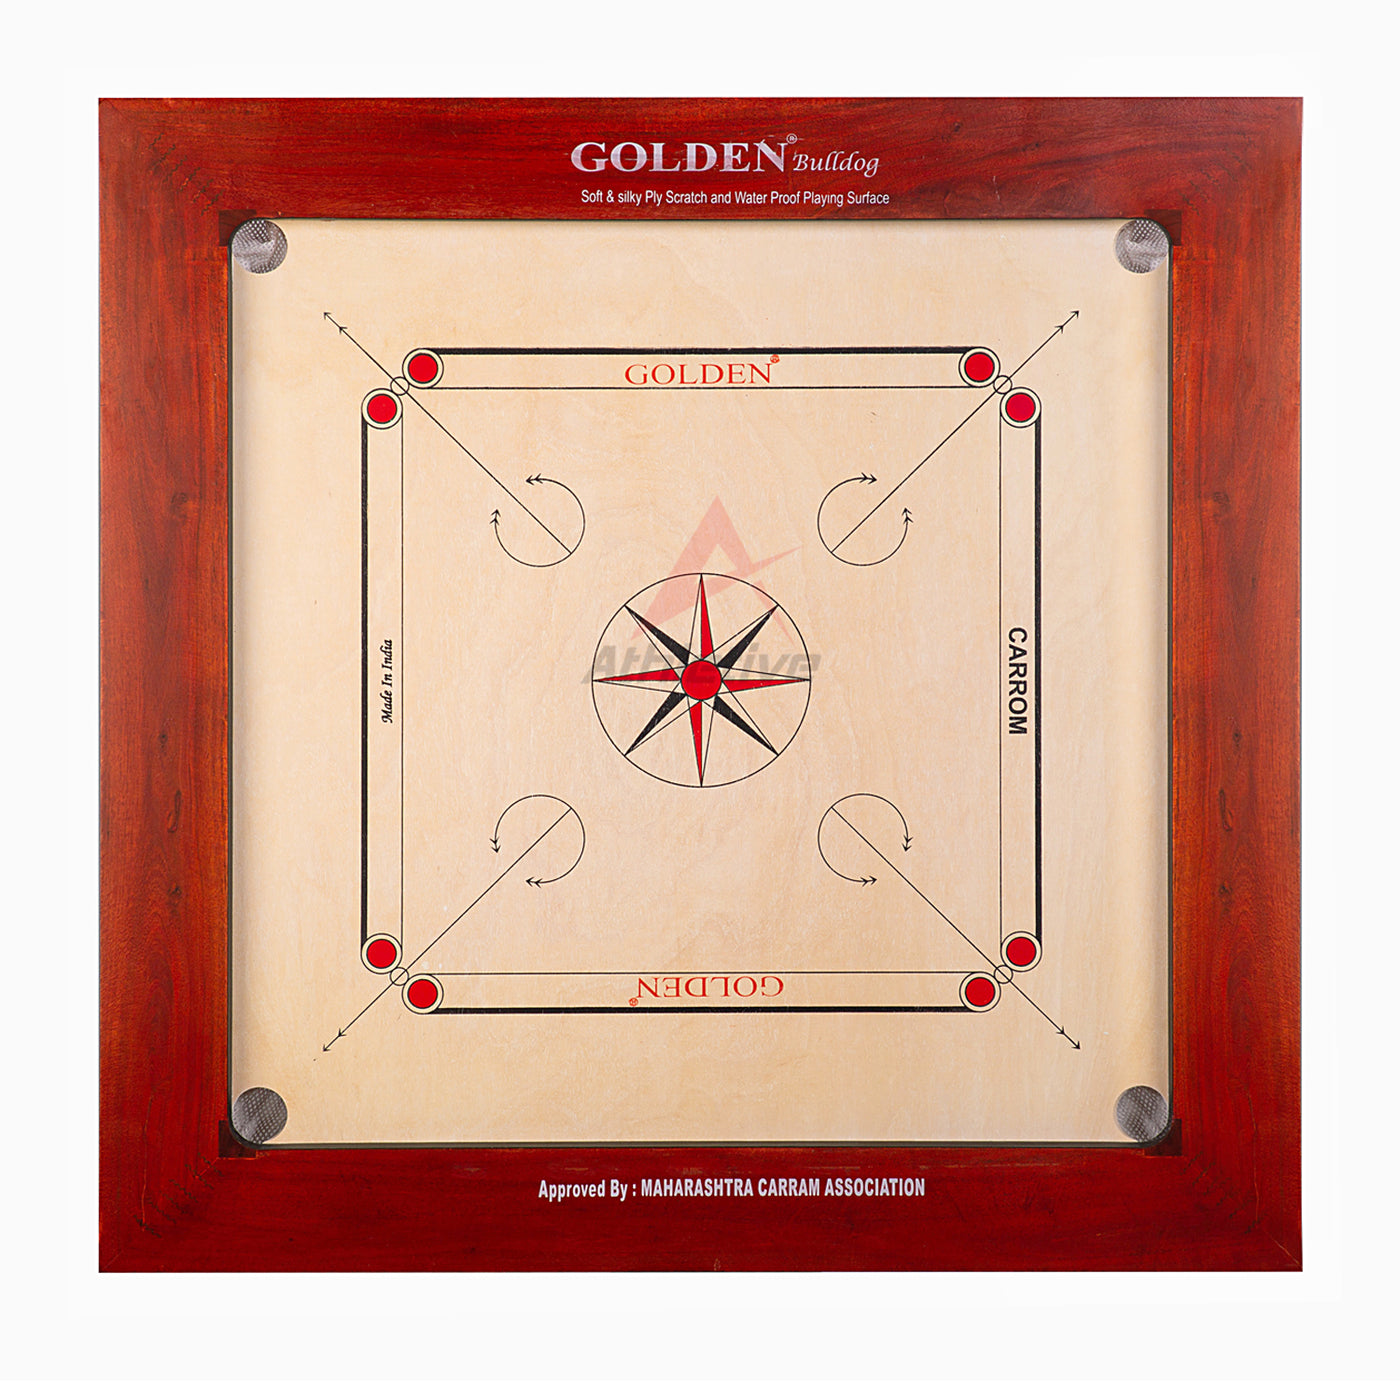 Golden Golden Bulldog Carrom Board - 28 mm freeshipping - athletive Carrom Board athletive